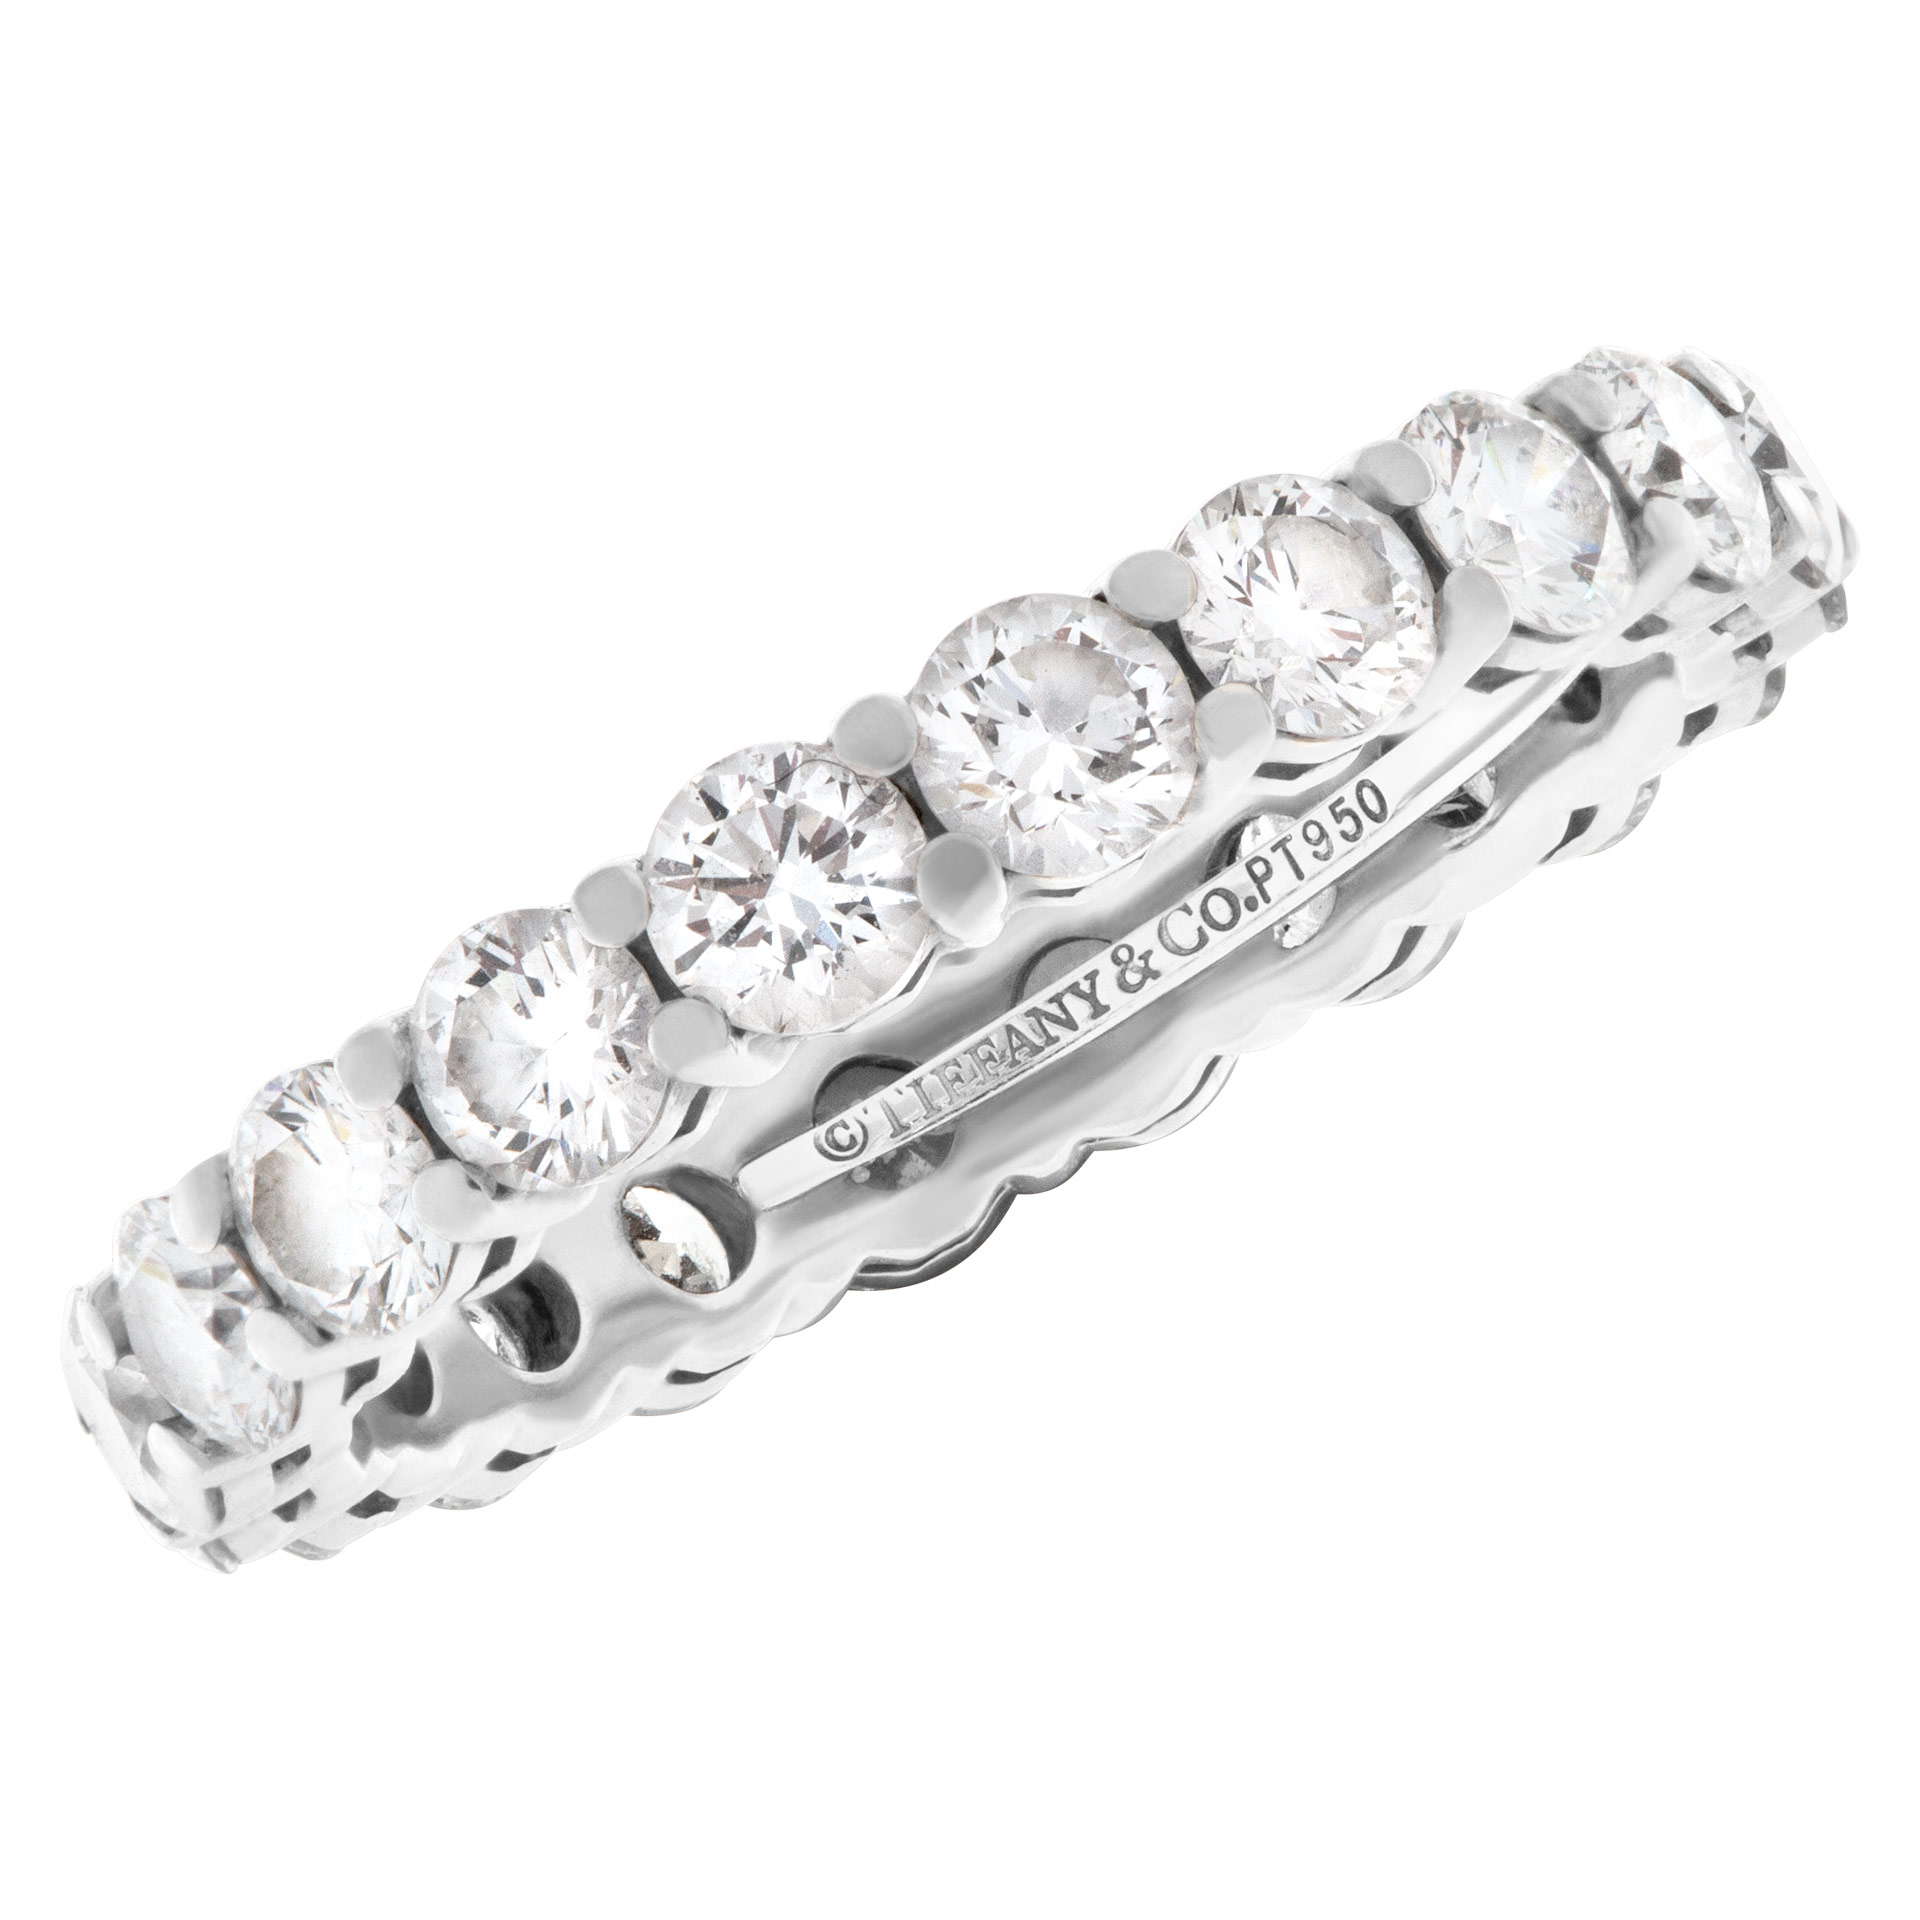 Tiffany & Co. Diamond Eternity Band and Ring platinum ring with 1.80 carat full cut round brilliant diamonds image 3